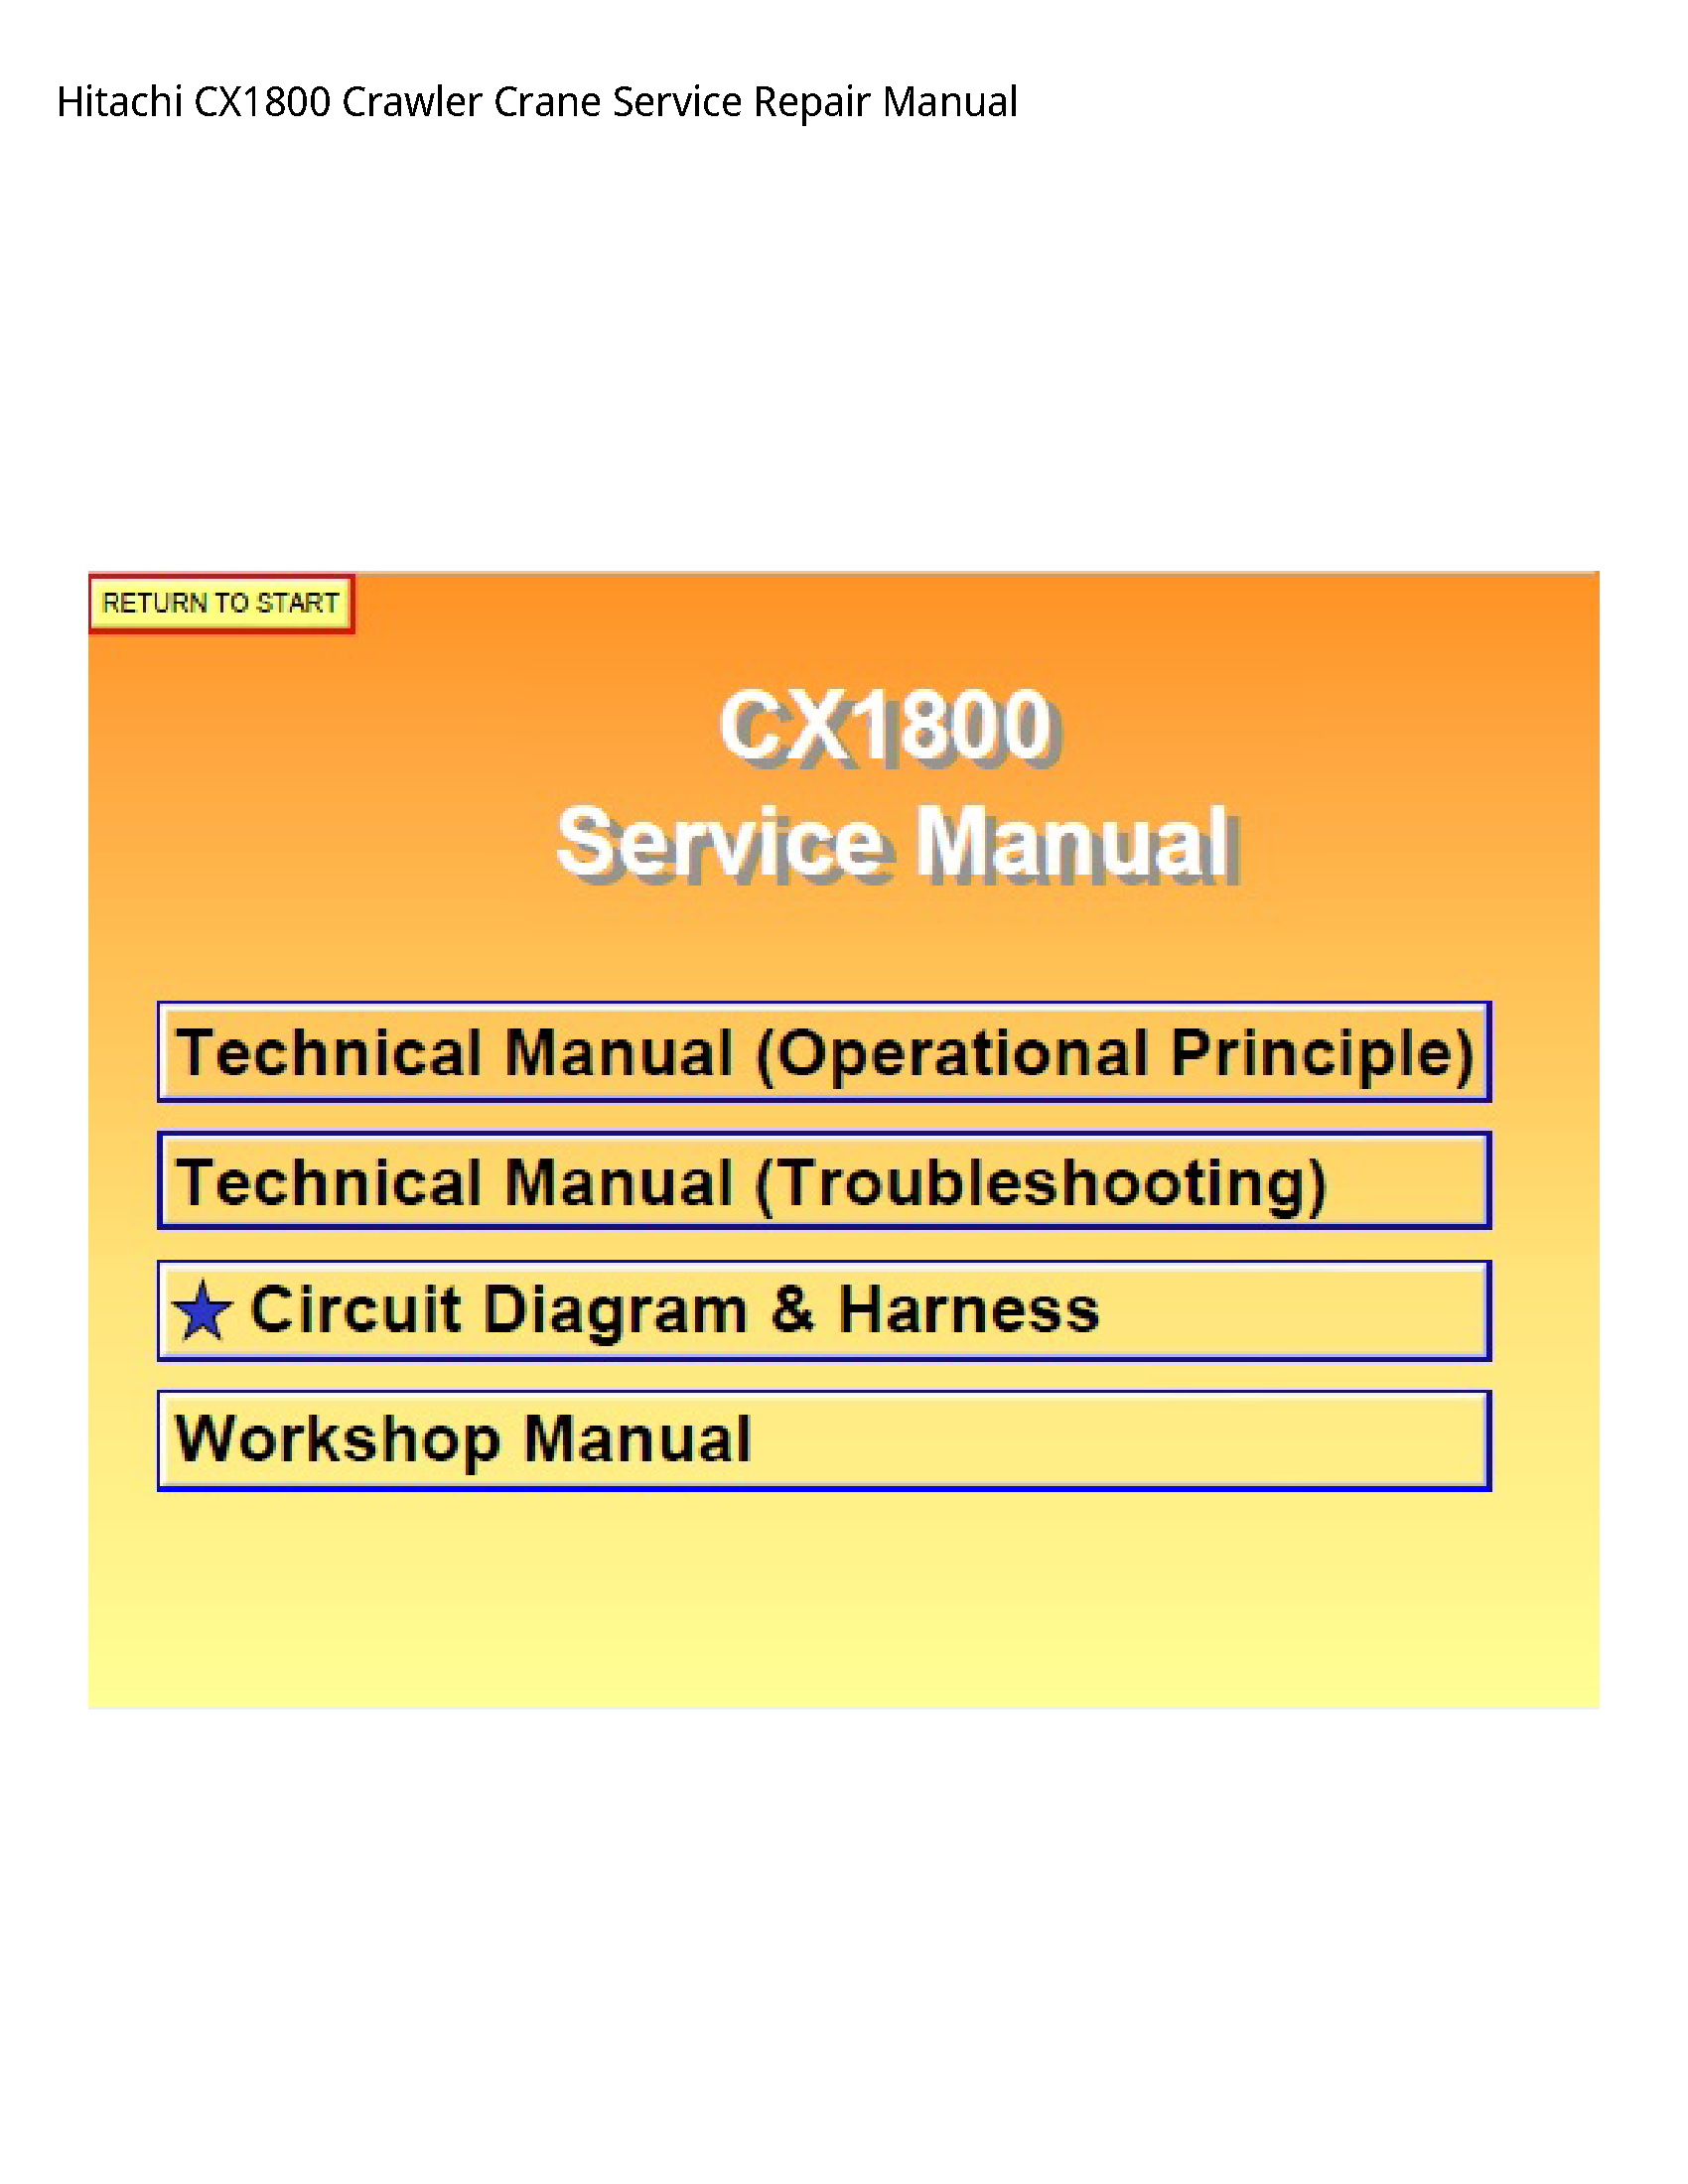 Hitachi CX1800 Crawler Crane manual